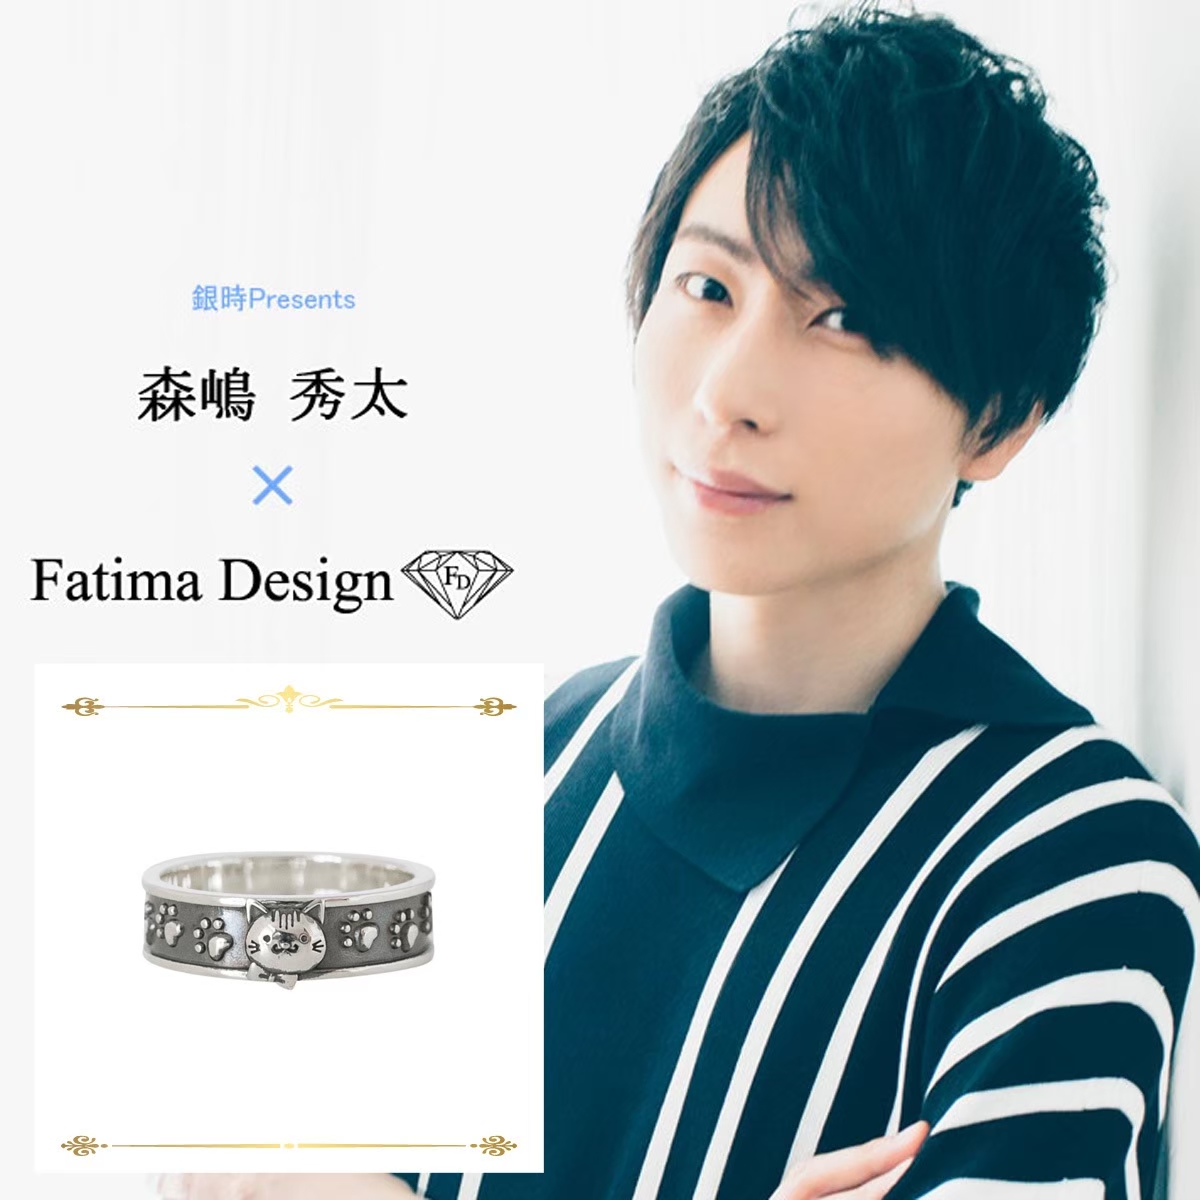 森嶋秀太 ×Fatima Design